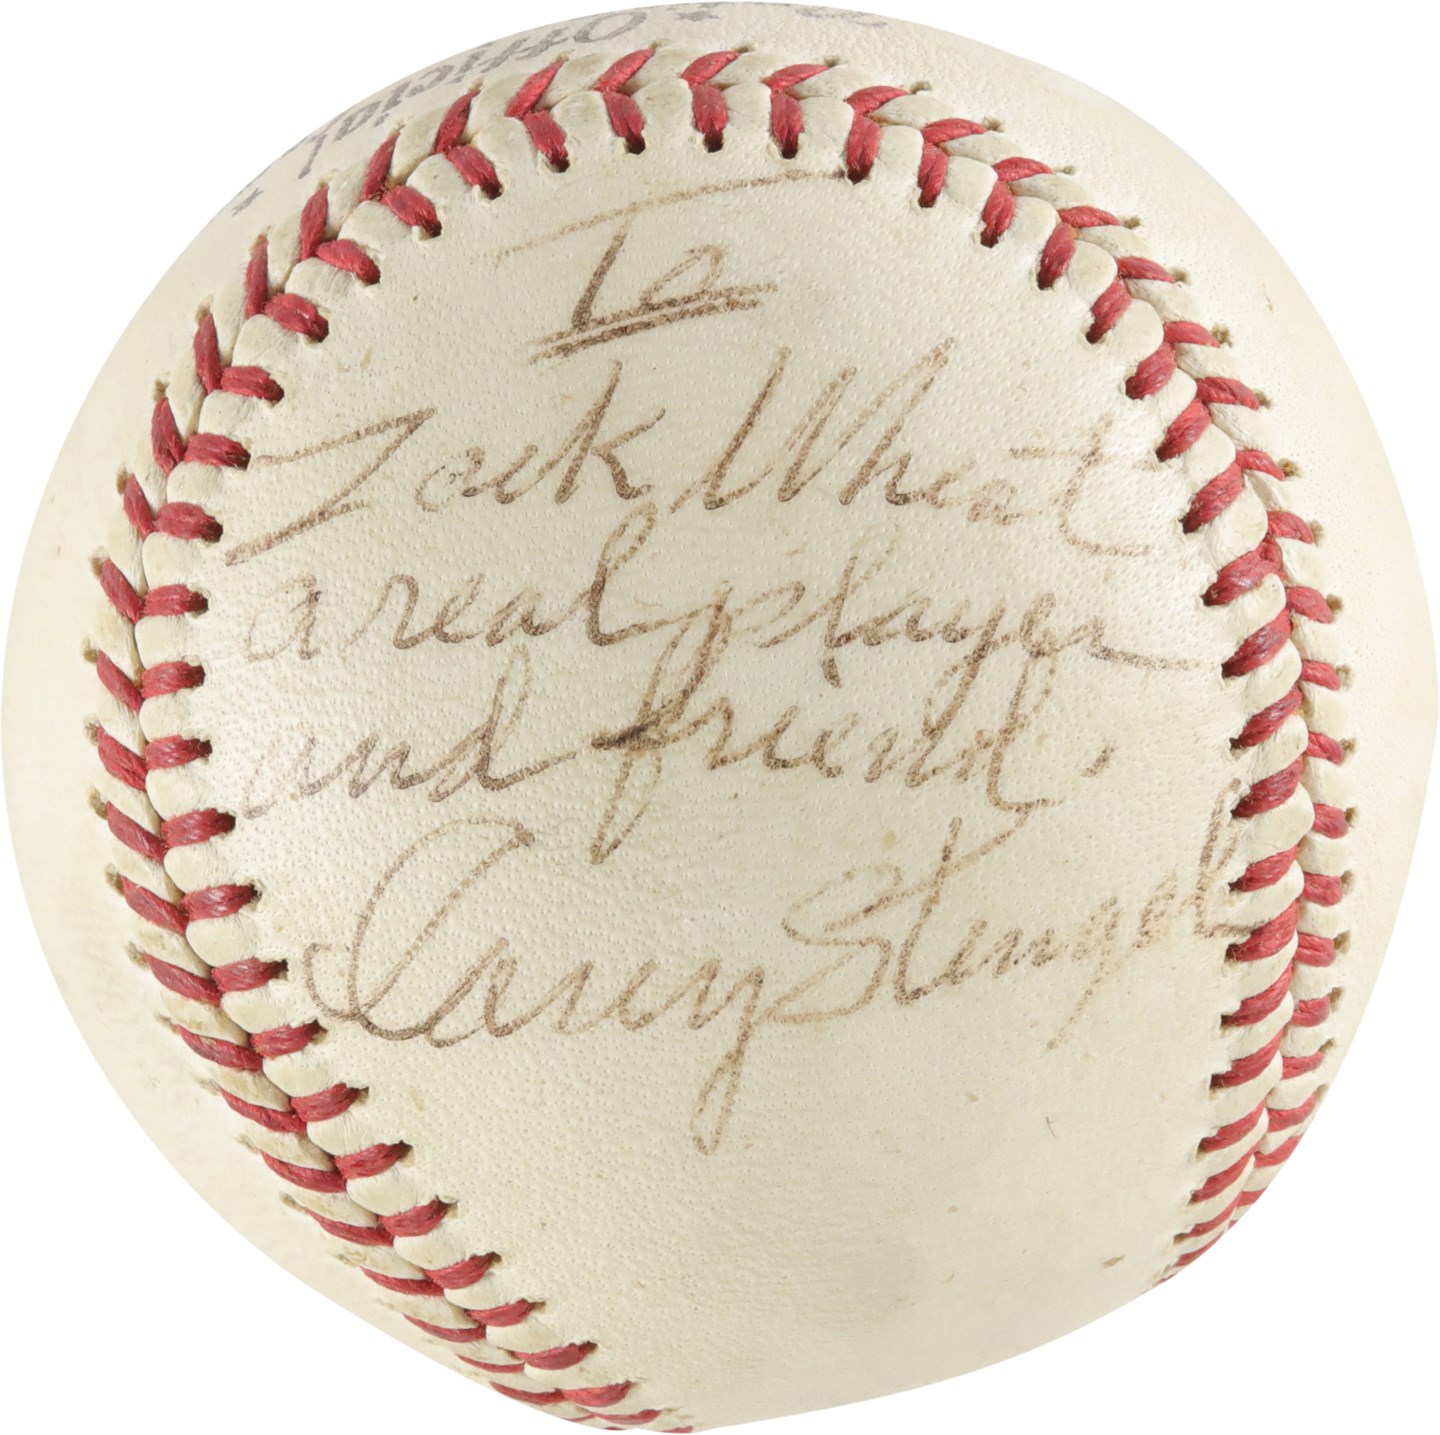 - 1960s High Grade Casey Stengel Signed Baseball Personalized to Zack Wheat (PSA)